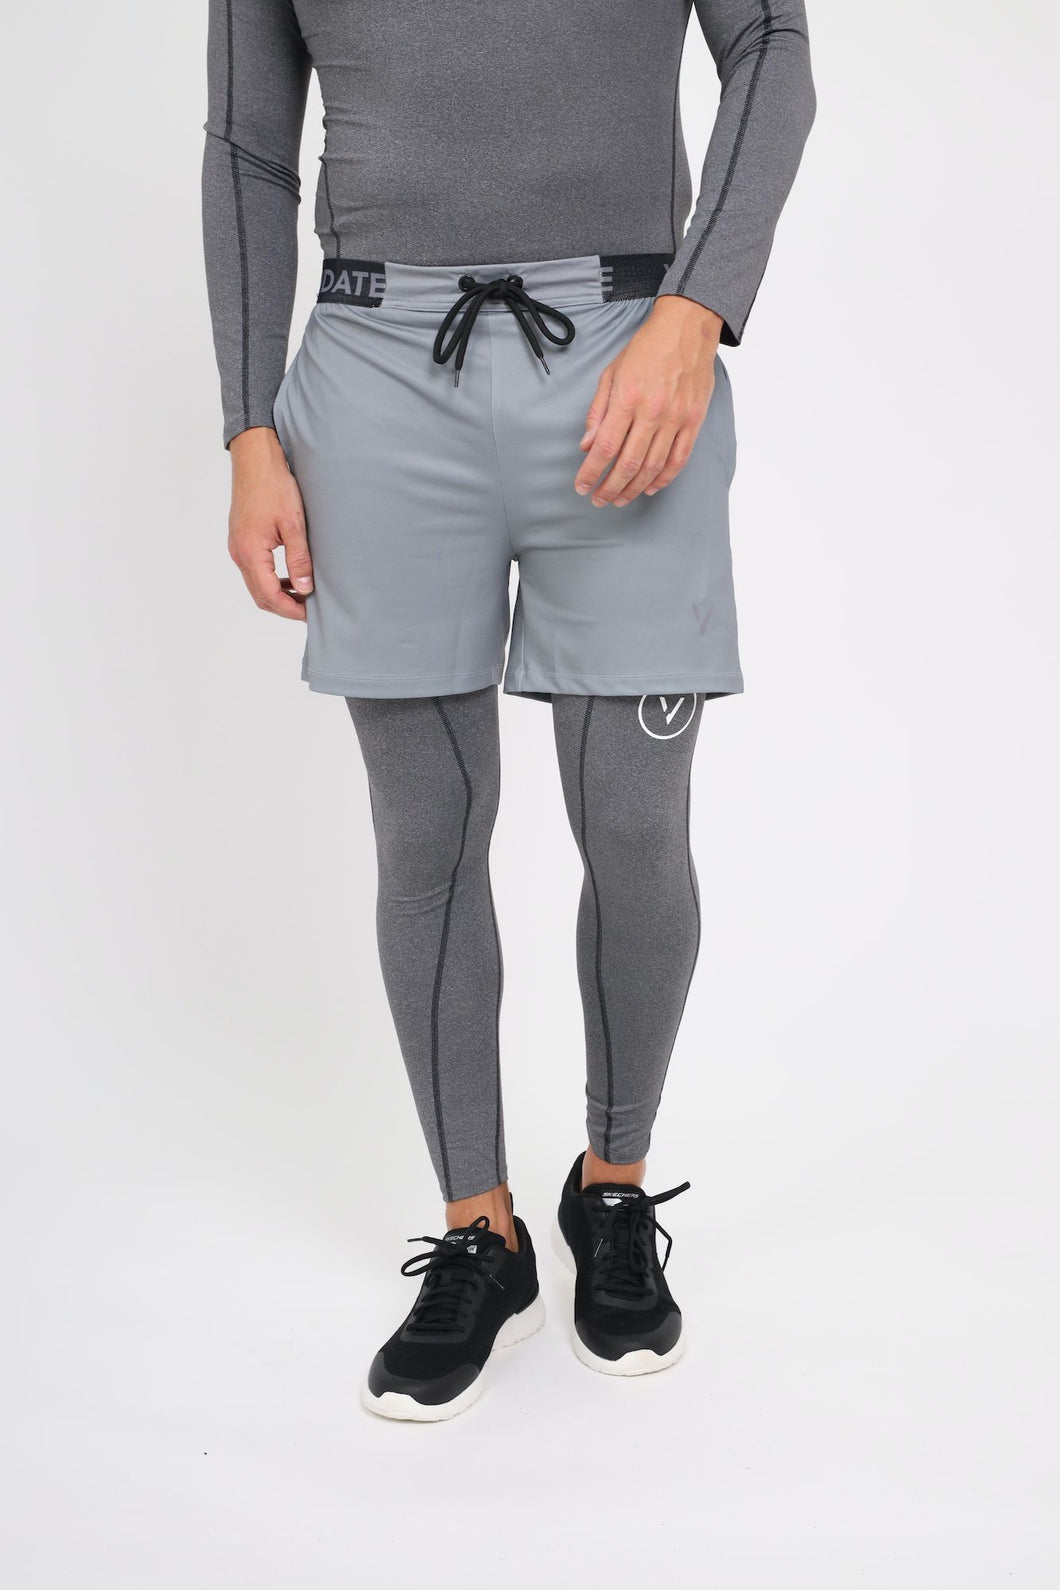 Validate Marcus Dri Fit Grey Shorts